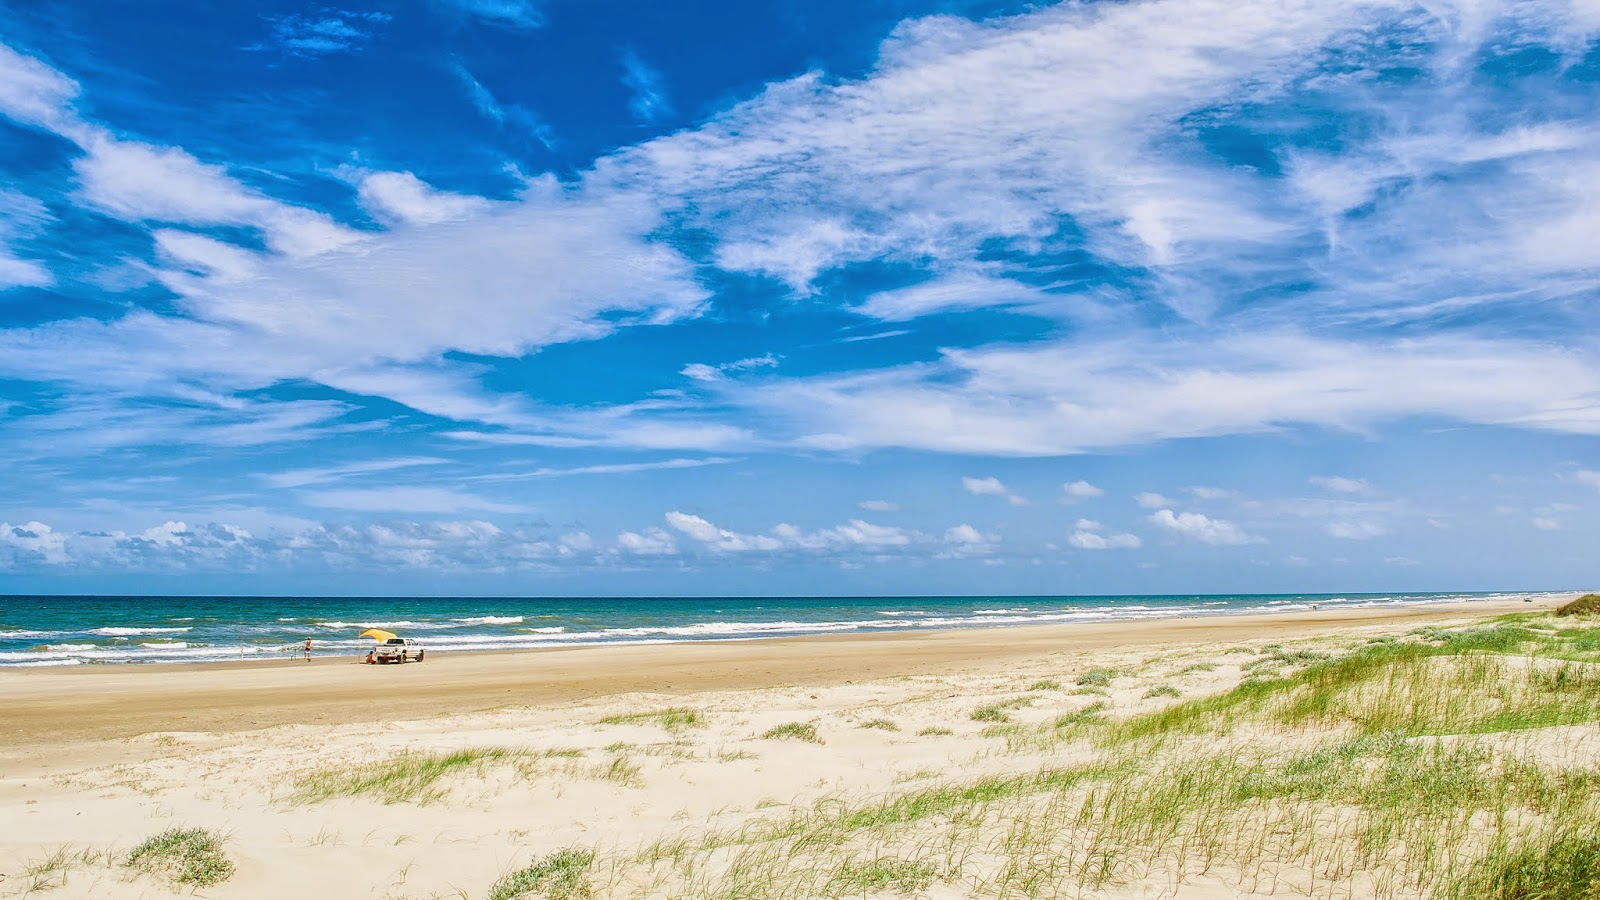 Photo of Praia do Farol da Solidao with bright sand surface